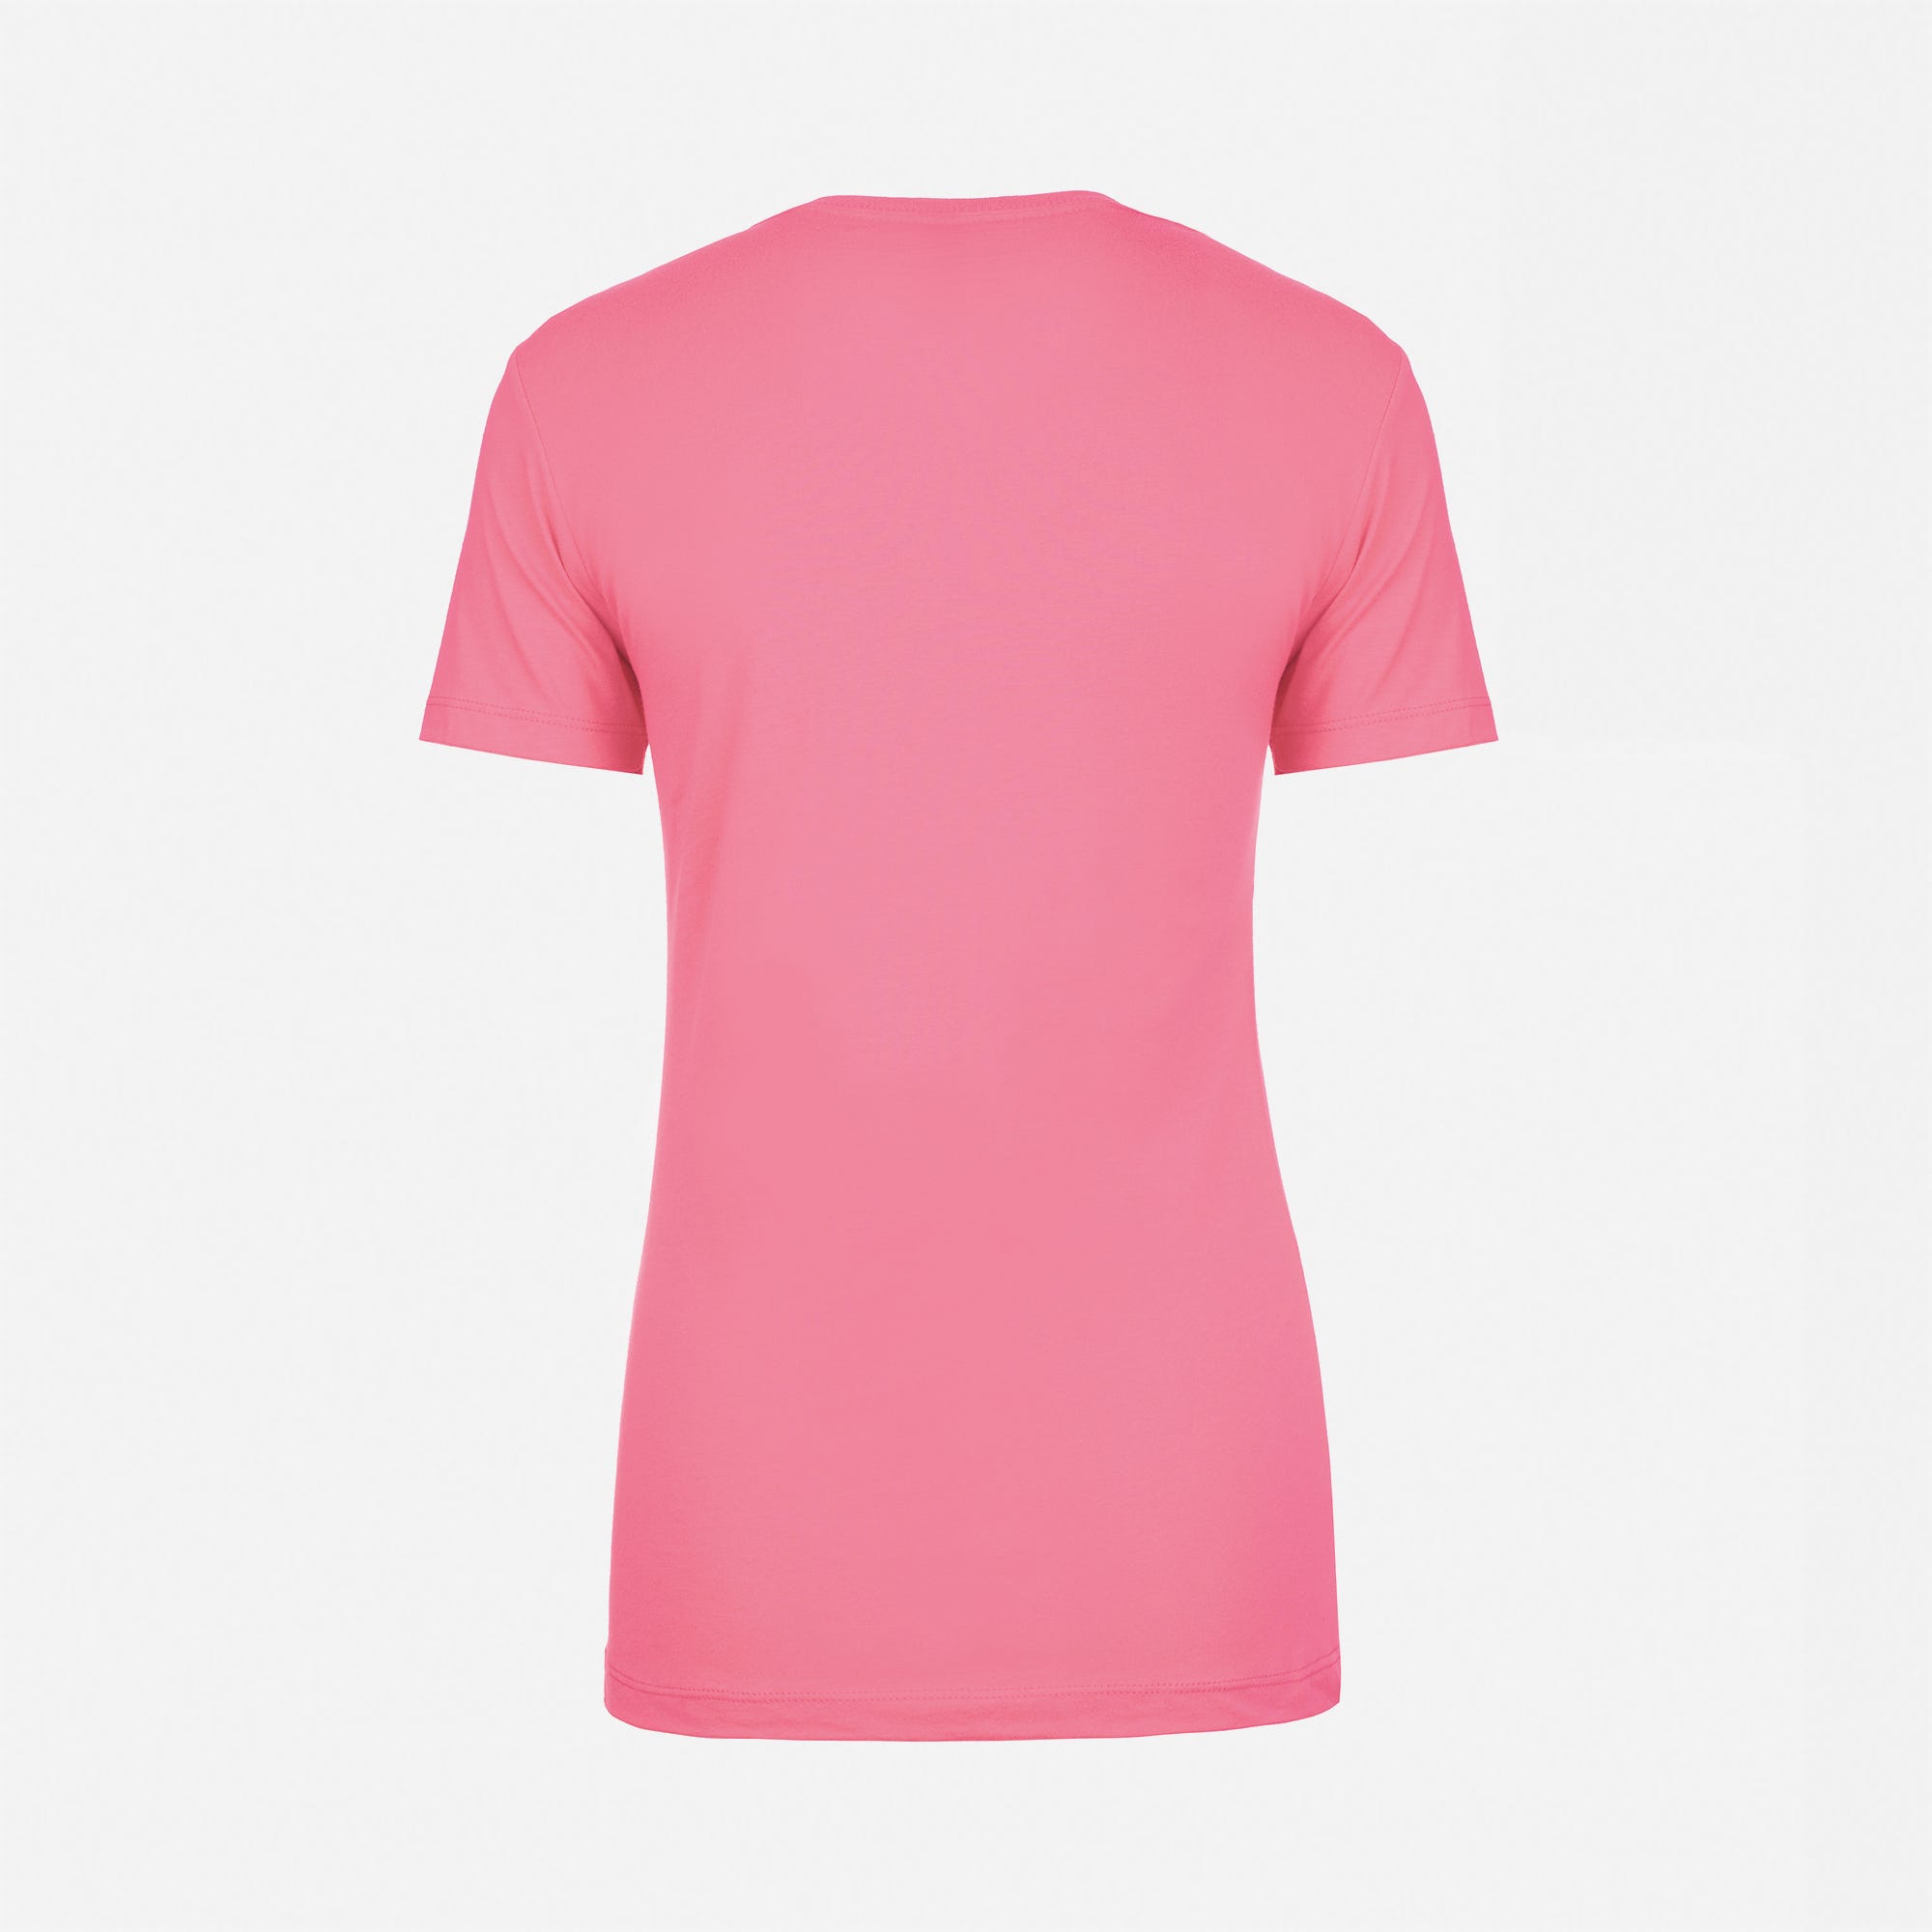 Cotton Boyfriend T-Shirt Hot Pink 3900 Next Level Apparel Sample Back View